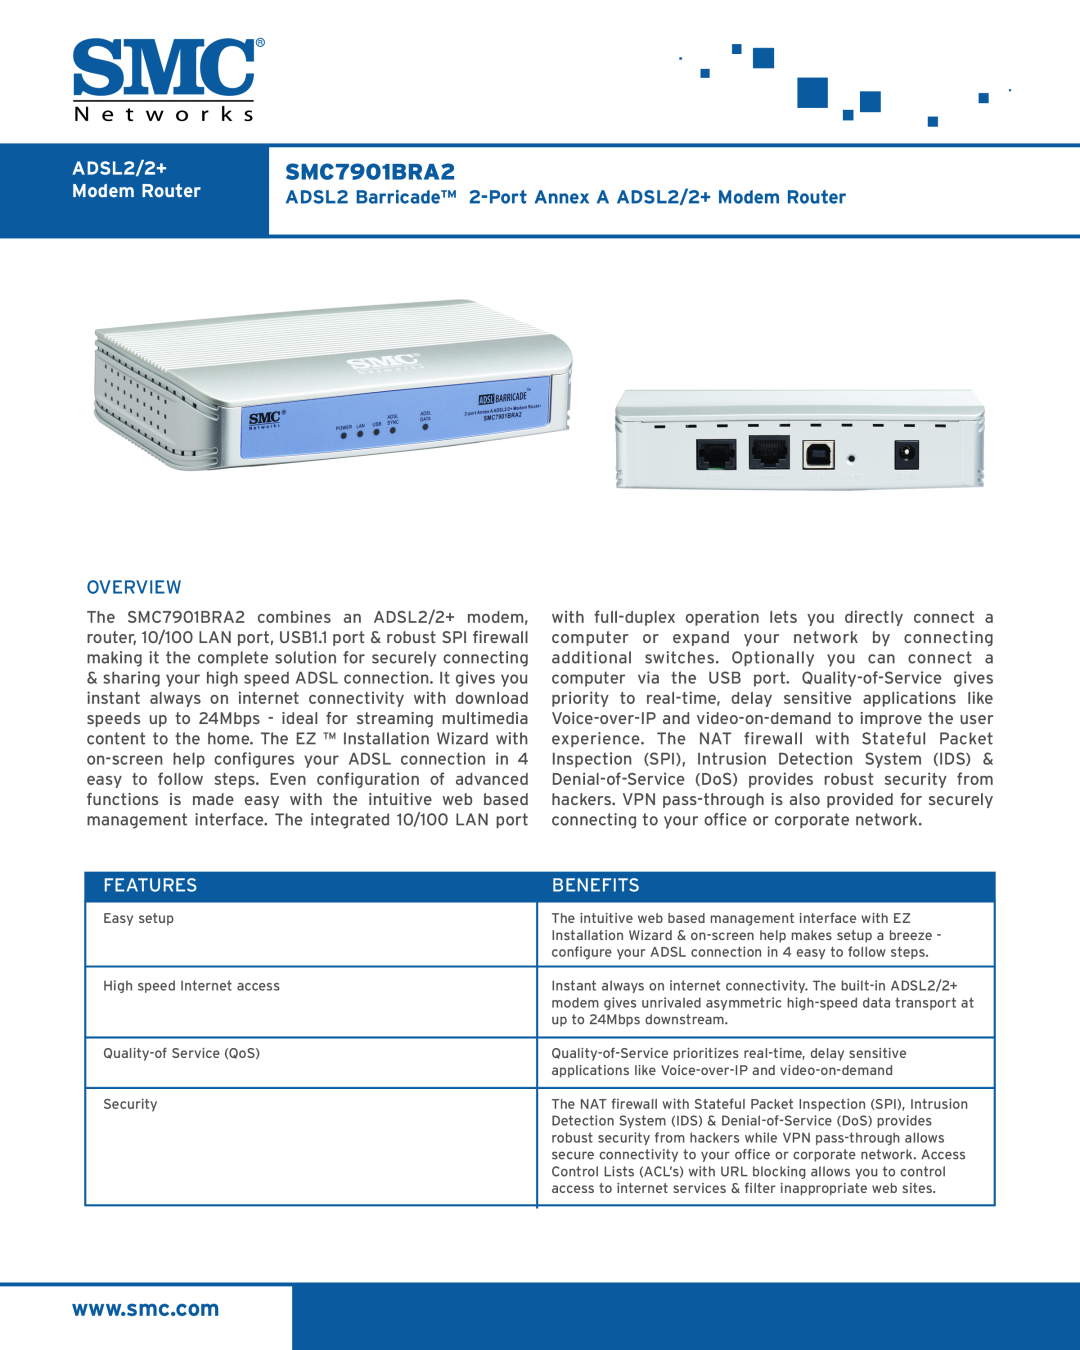 SMC Networks SMC7901BRA2 manual ADSL2 Barricade 2-Port Annex A ADSL2/2+ Modem Router, Overview, Features, Benefits 